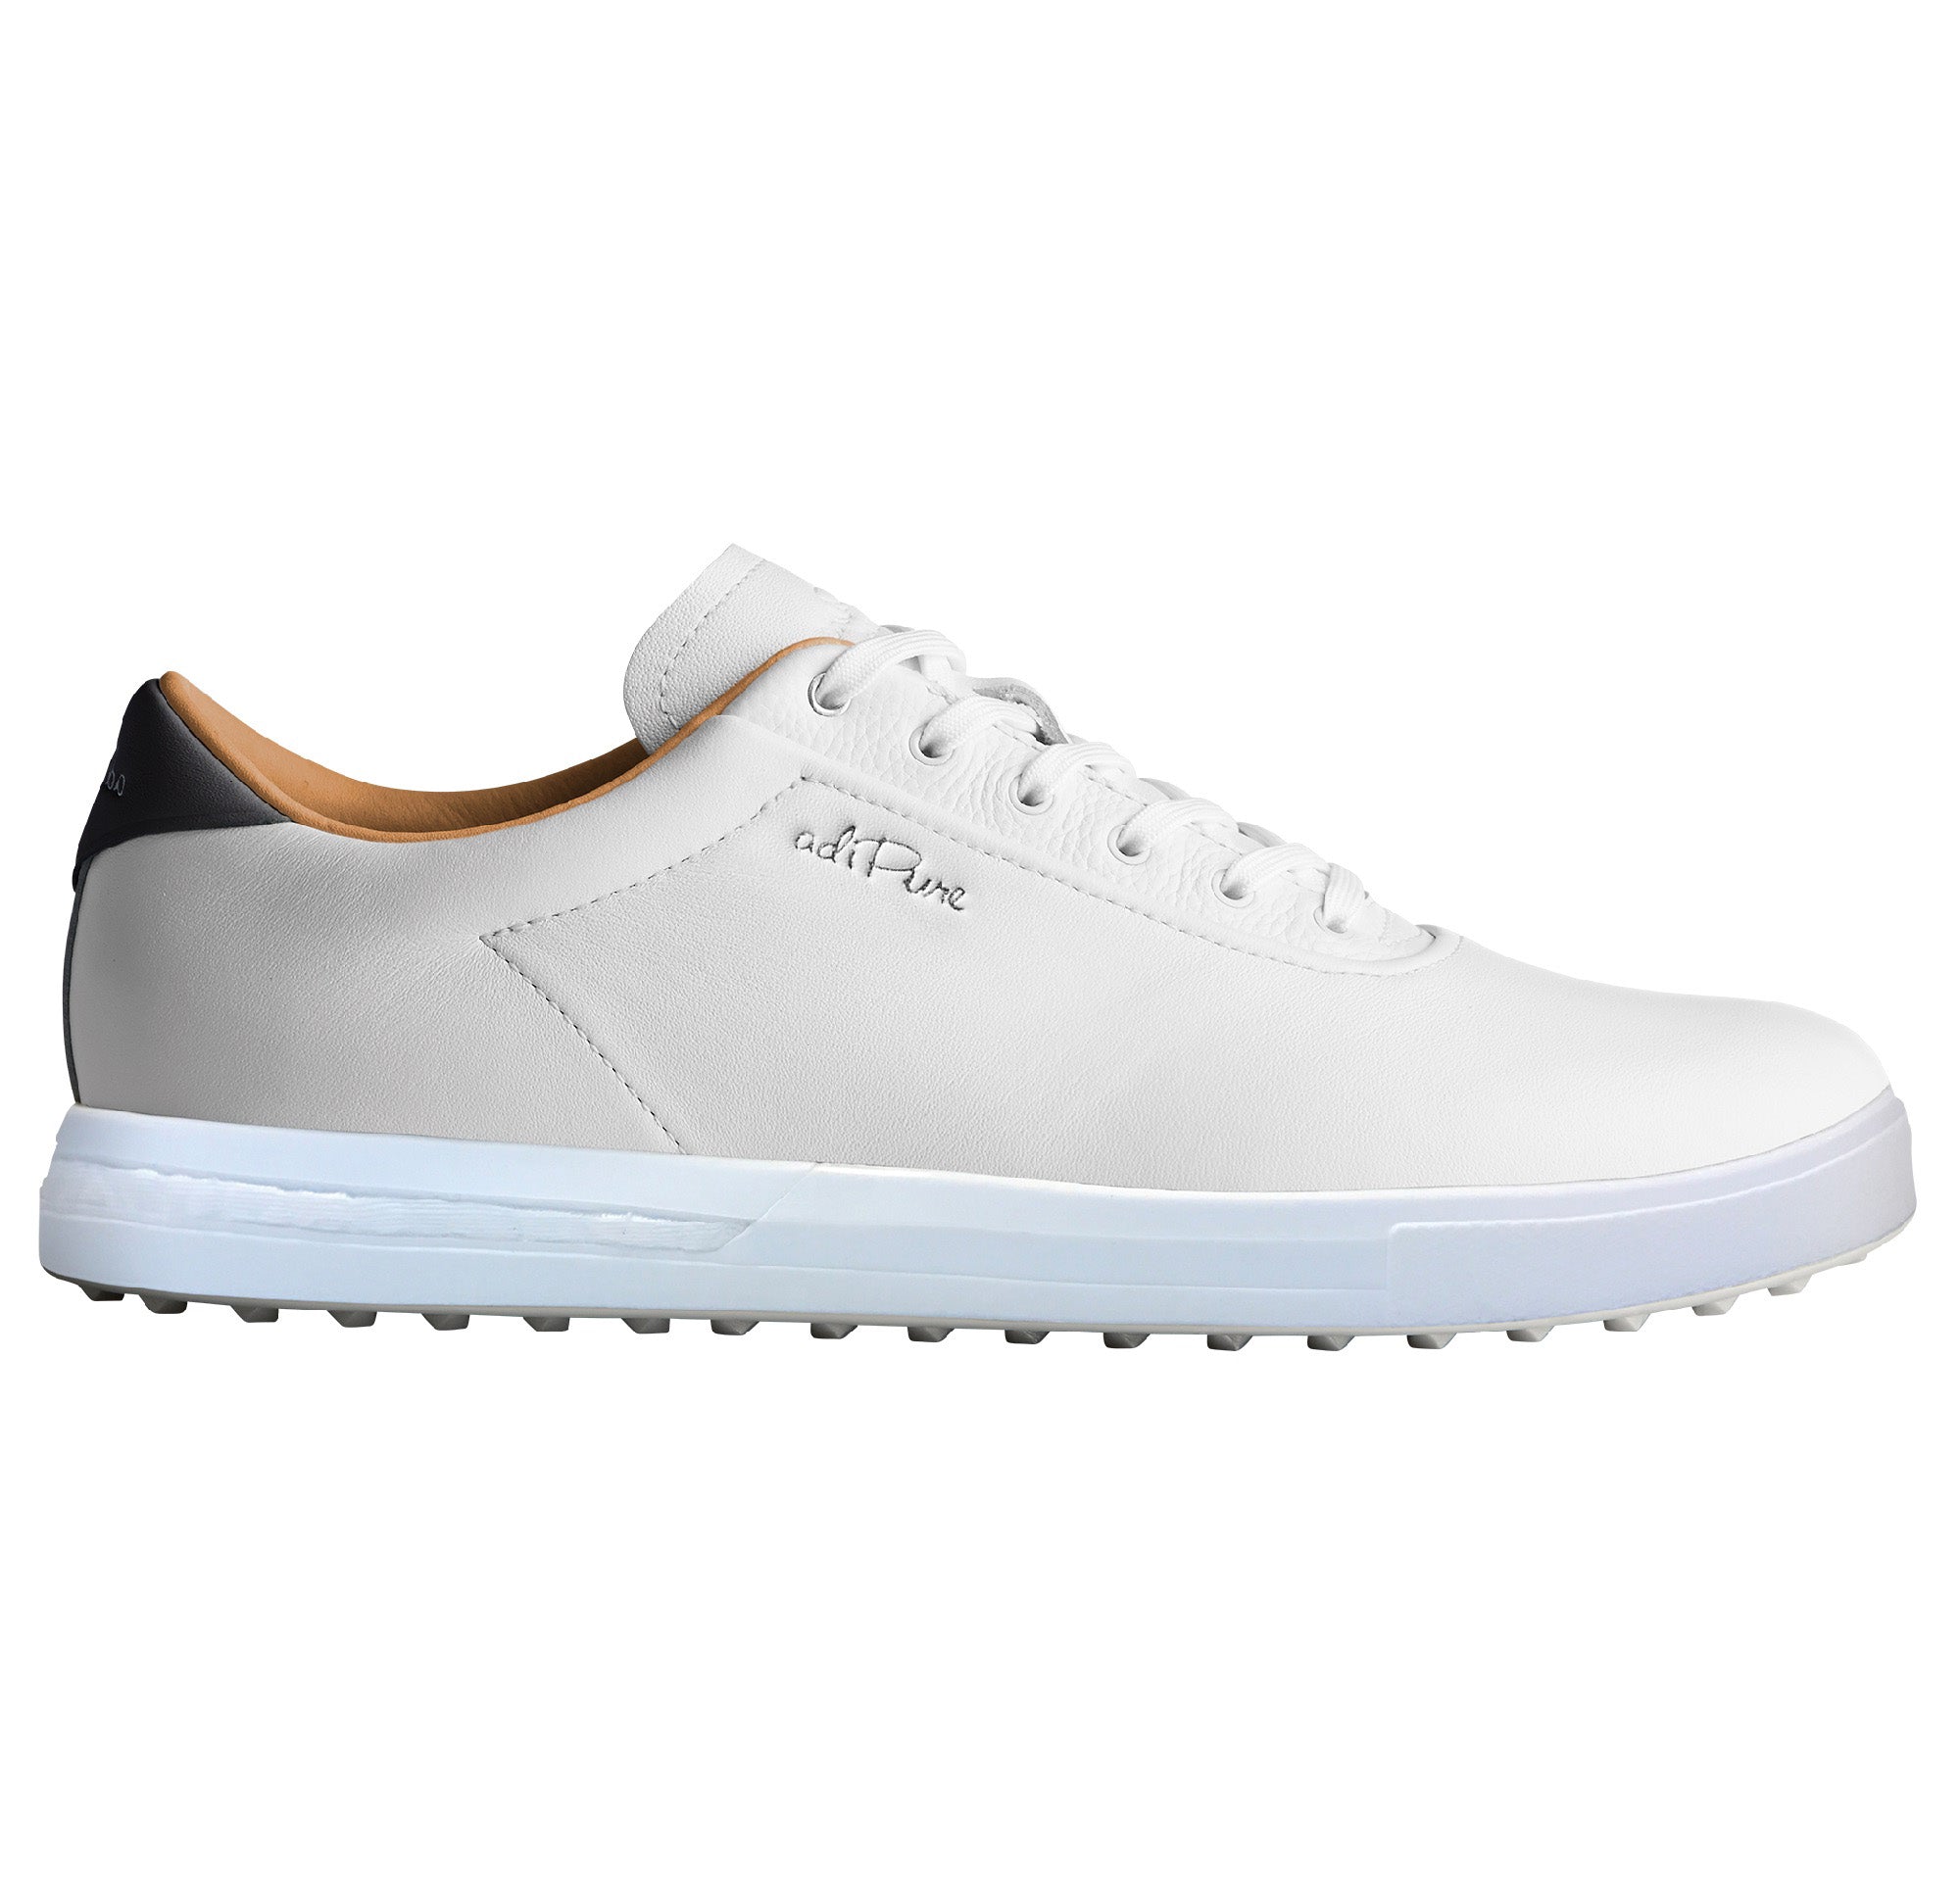 adidas AdiPure SP Golf Shoes F33746 